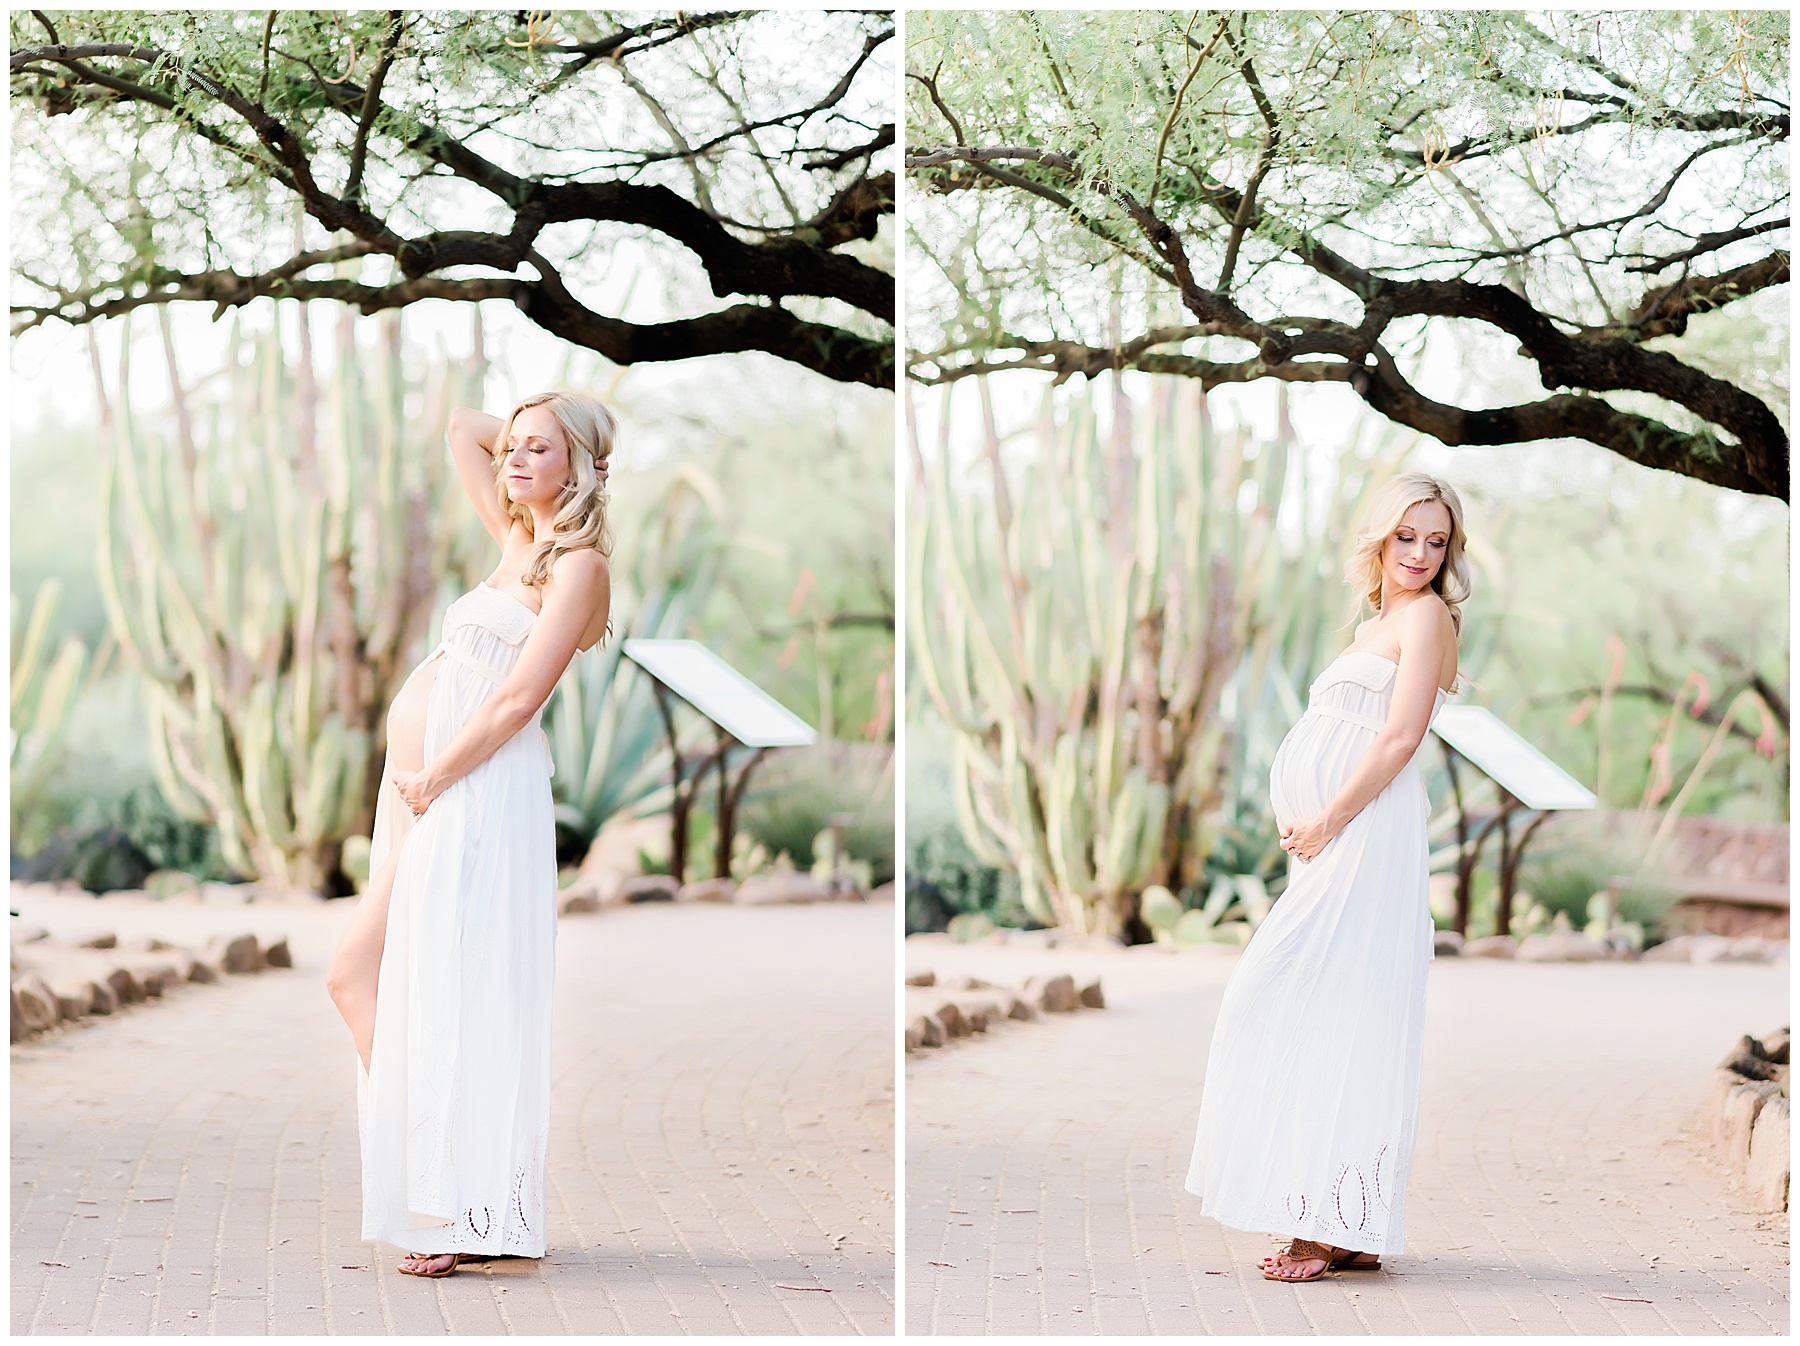 Dorota's-Maternity-Session-Phoenix-Arizona-Ashley-Flug-Photography43.jpg